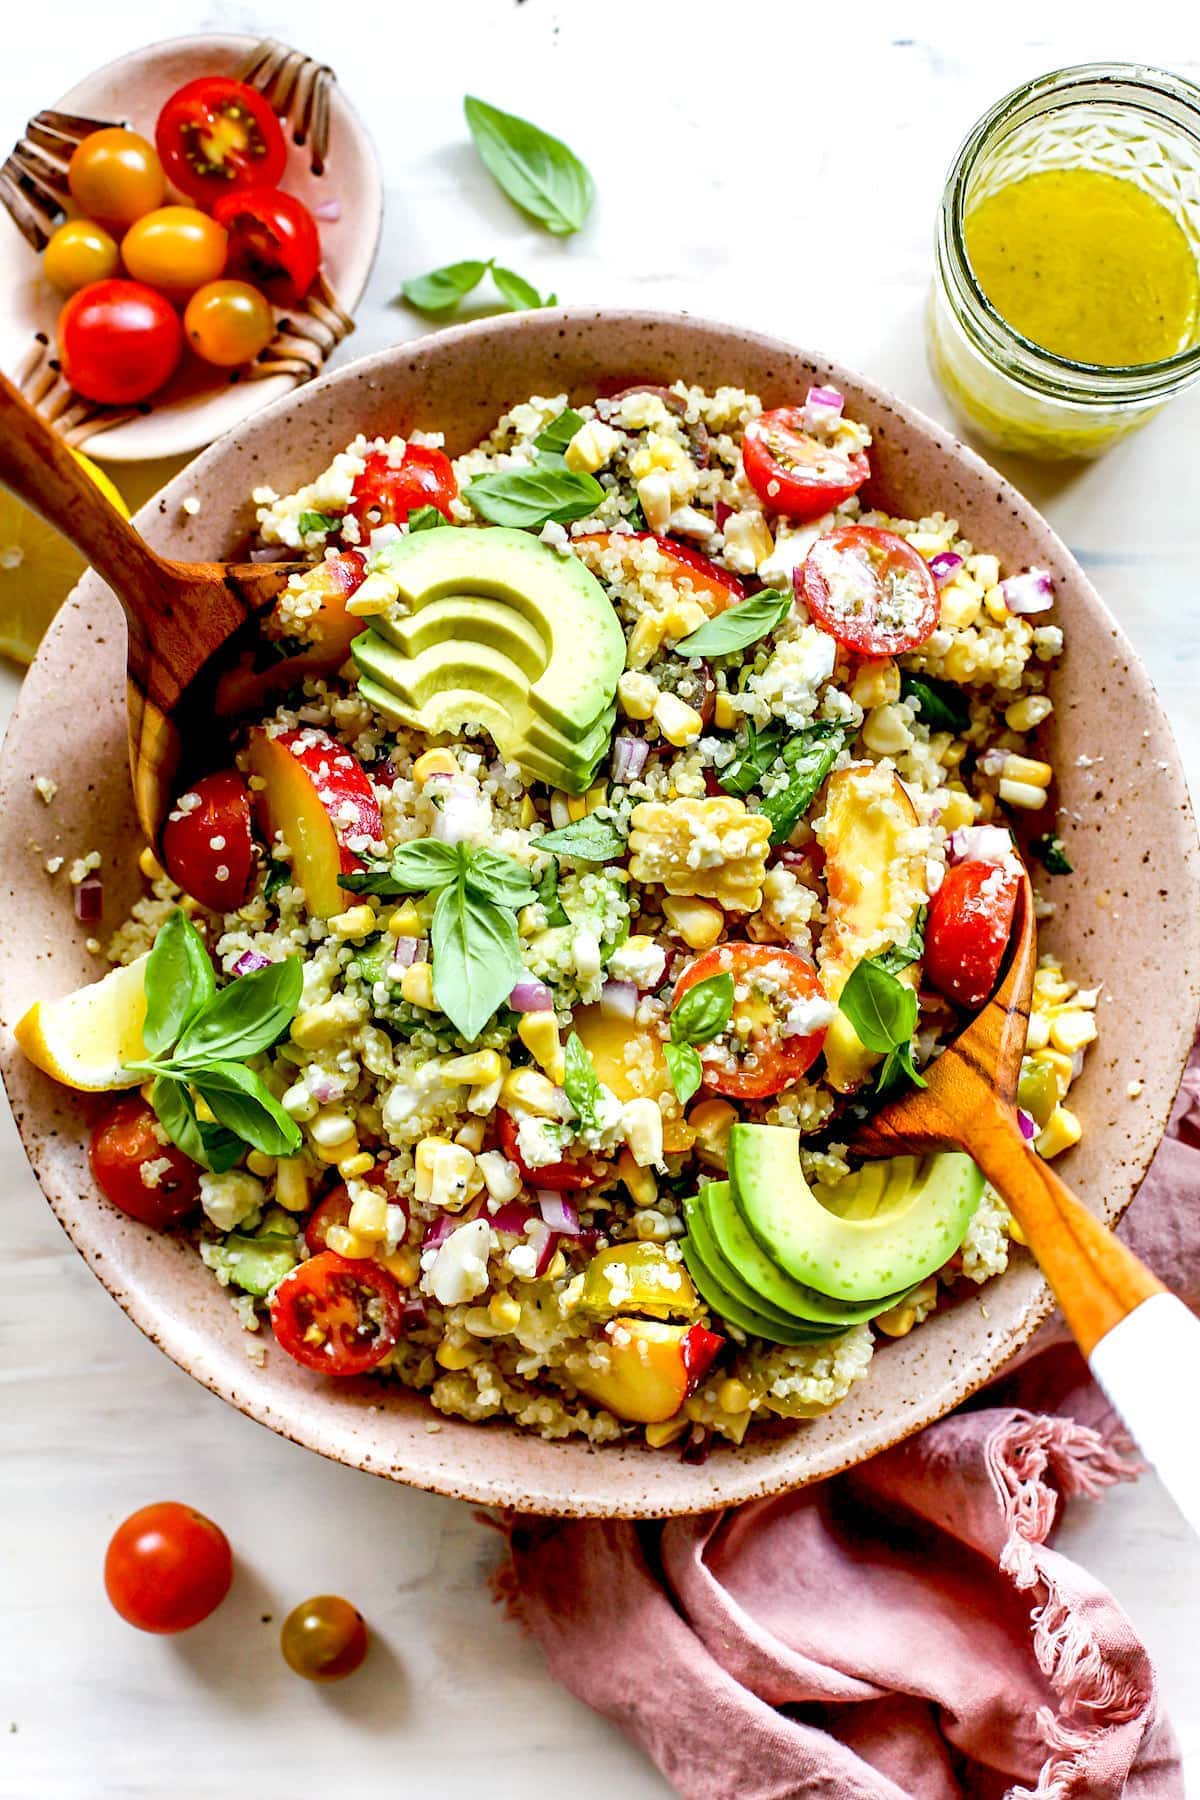 https://www.twopeasandtheirpod.com/wp-content/uploads/2020/07/Summer-Quinoa-Salad-8.jpg